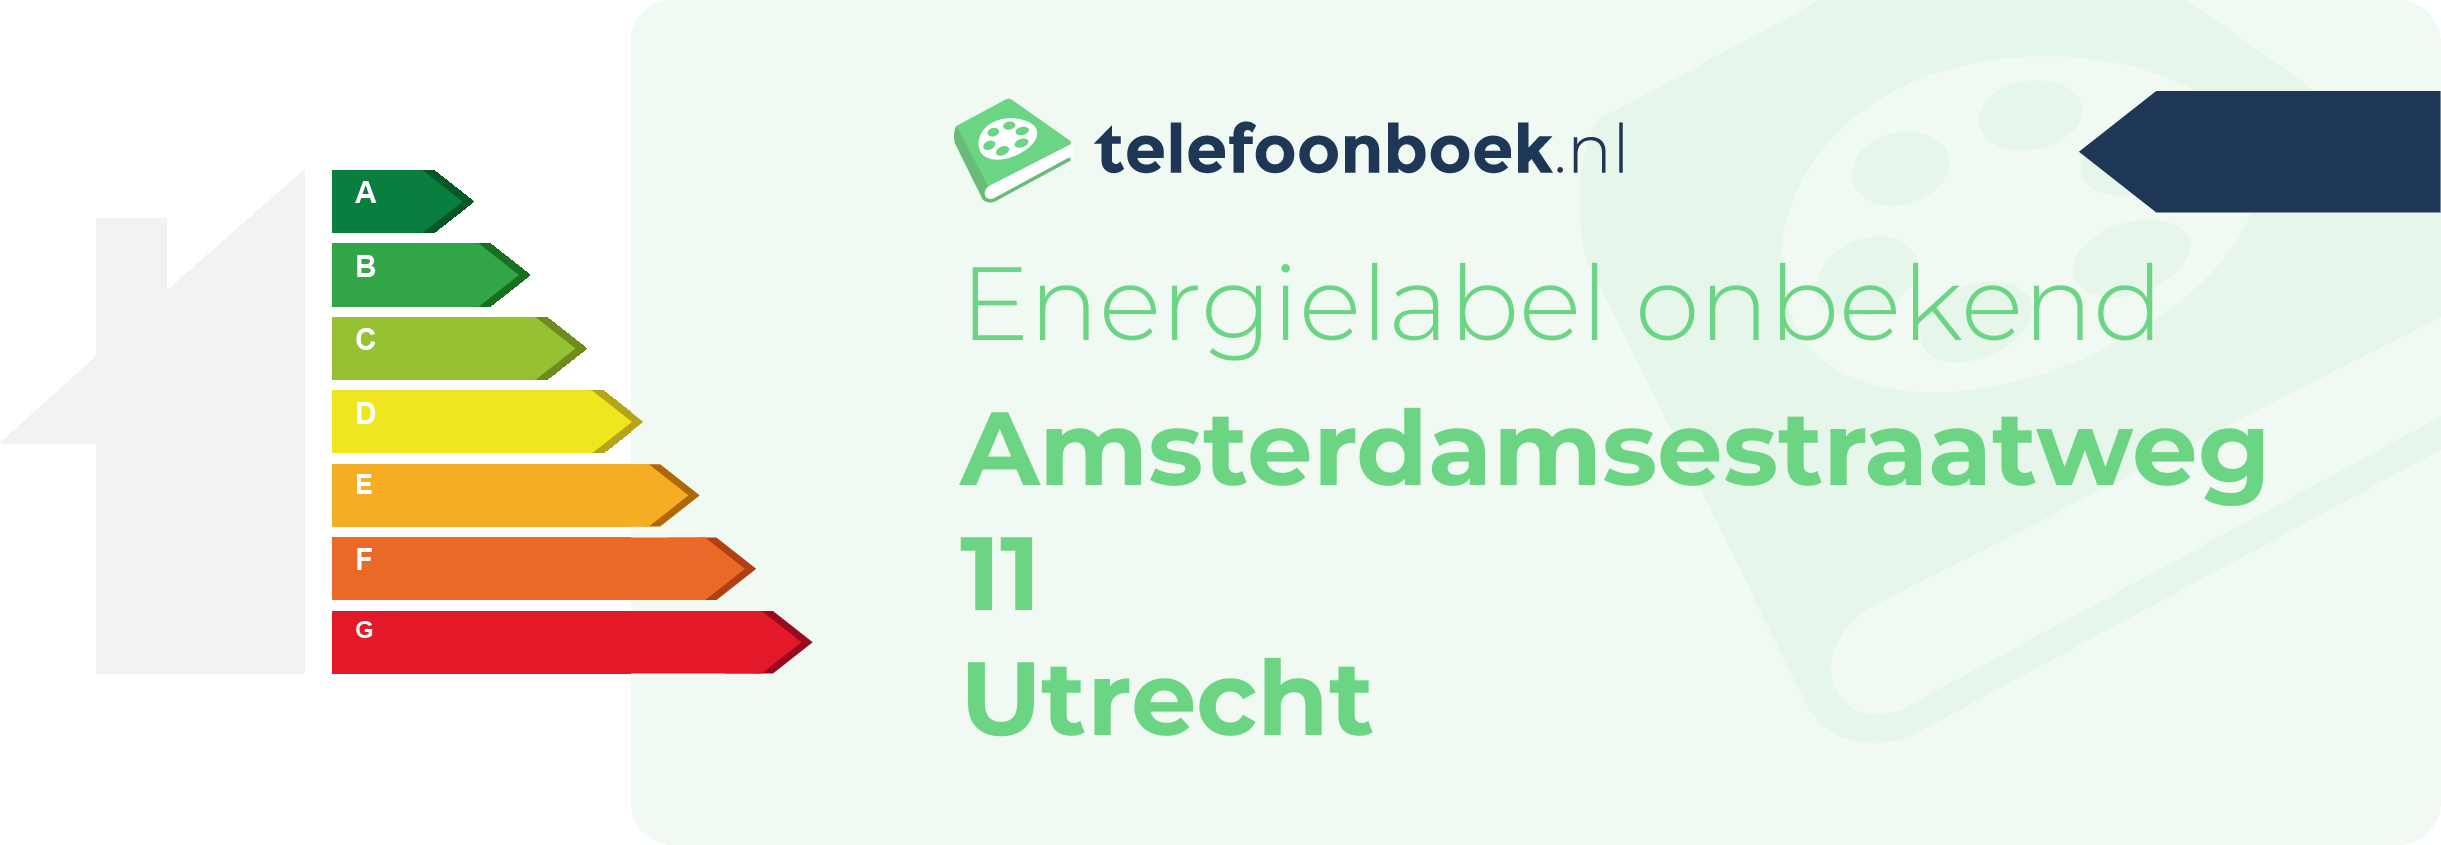 Energielabel Amsterdamsestraatweg 11 Utrecht